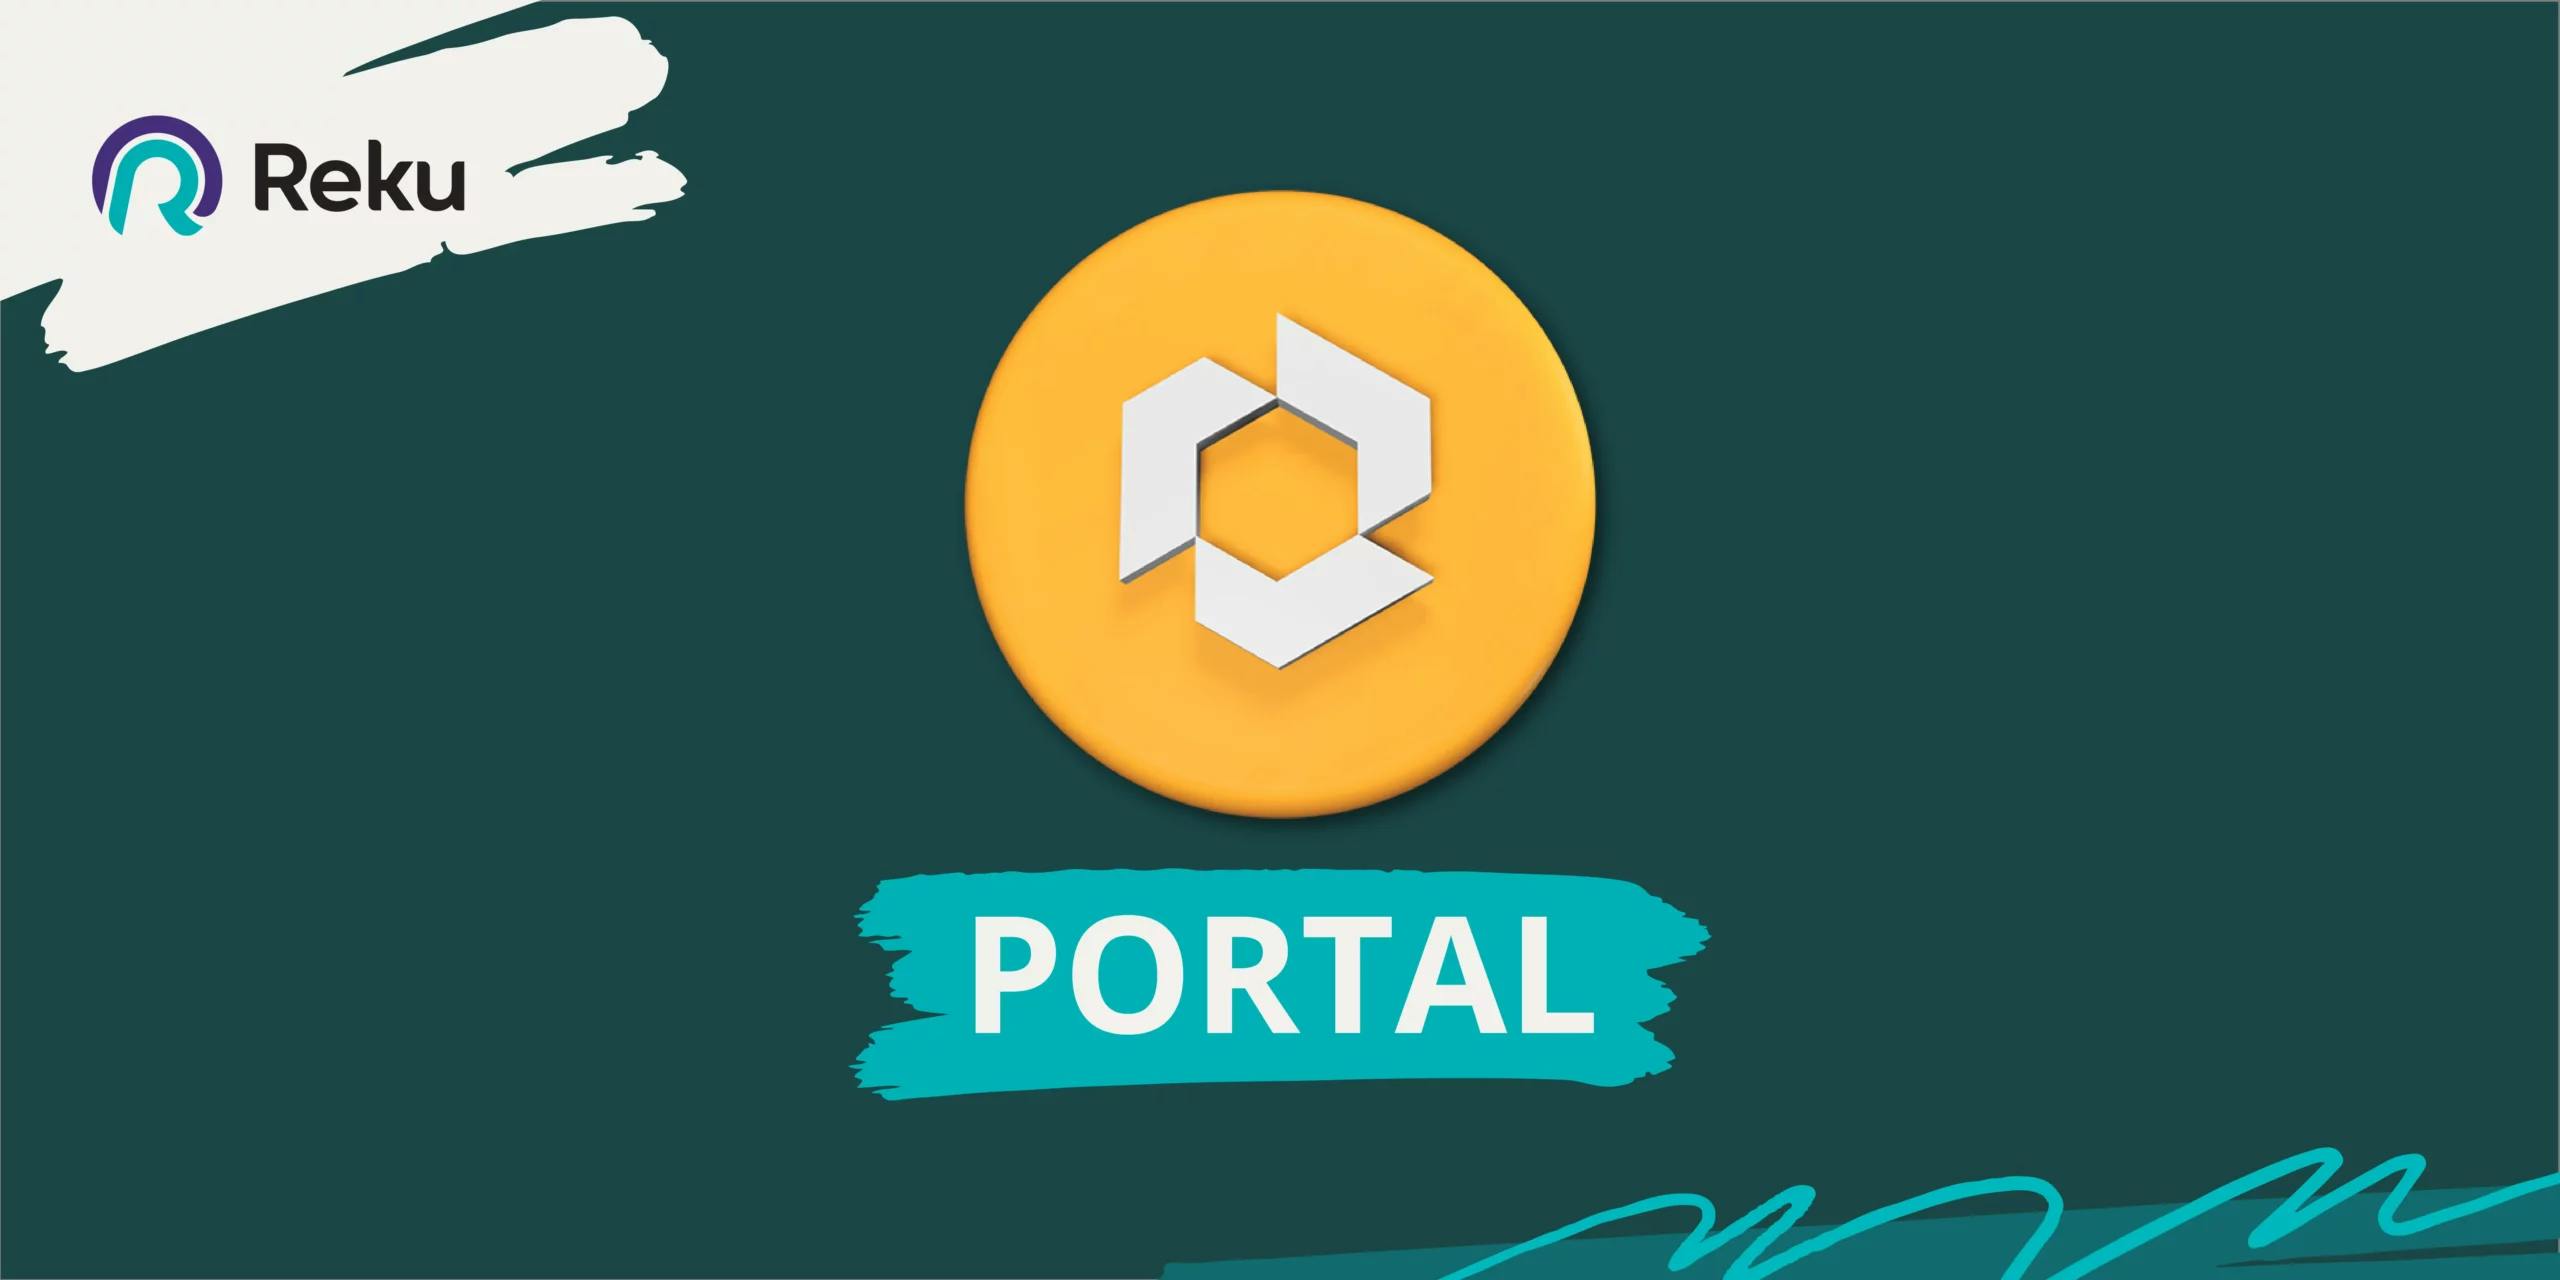 Apa itu Portal?